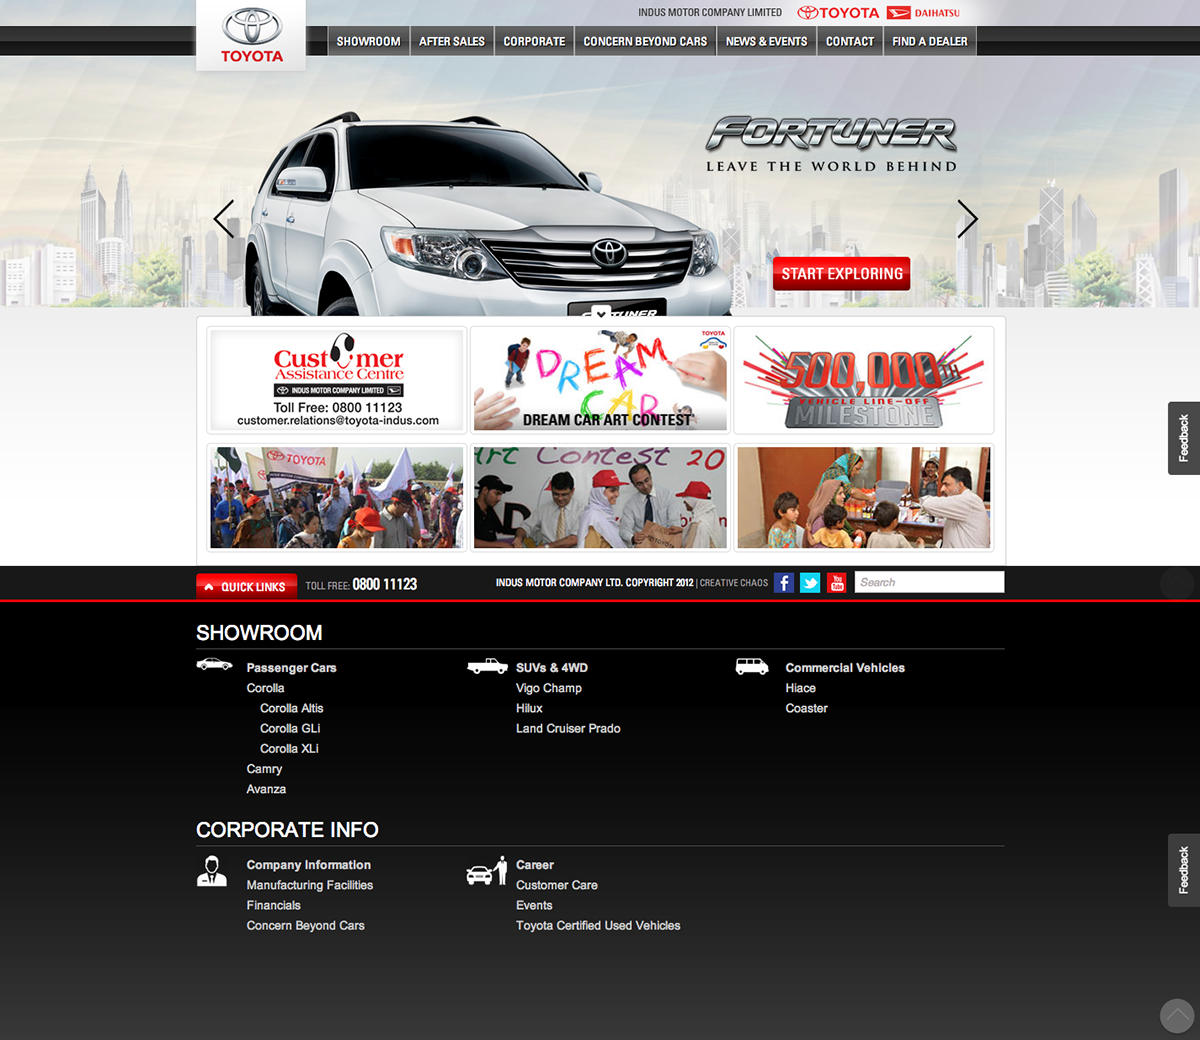 toyota indus motor company Pakistan Cars showroom corolla vigo champ fortuner Camry altis Daihatsu Website creative chaos